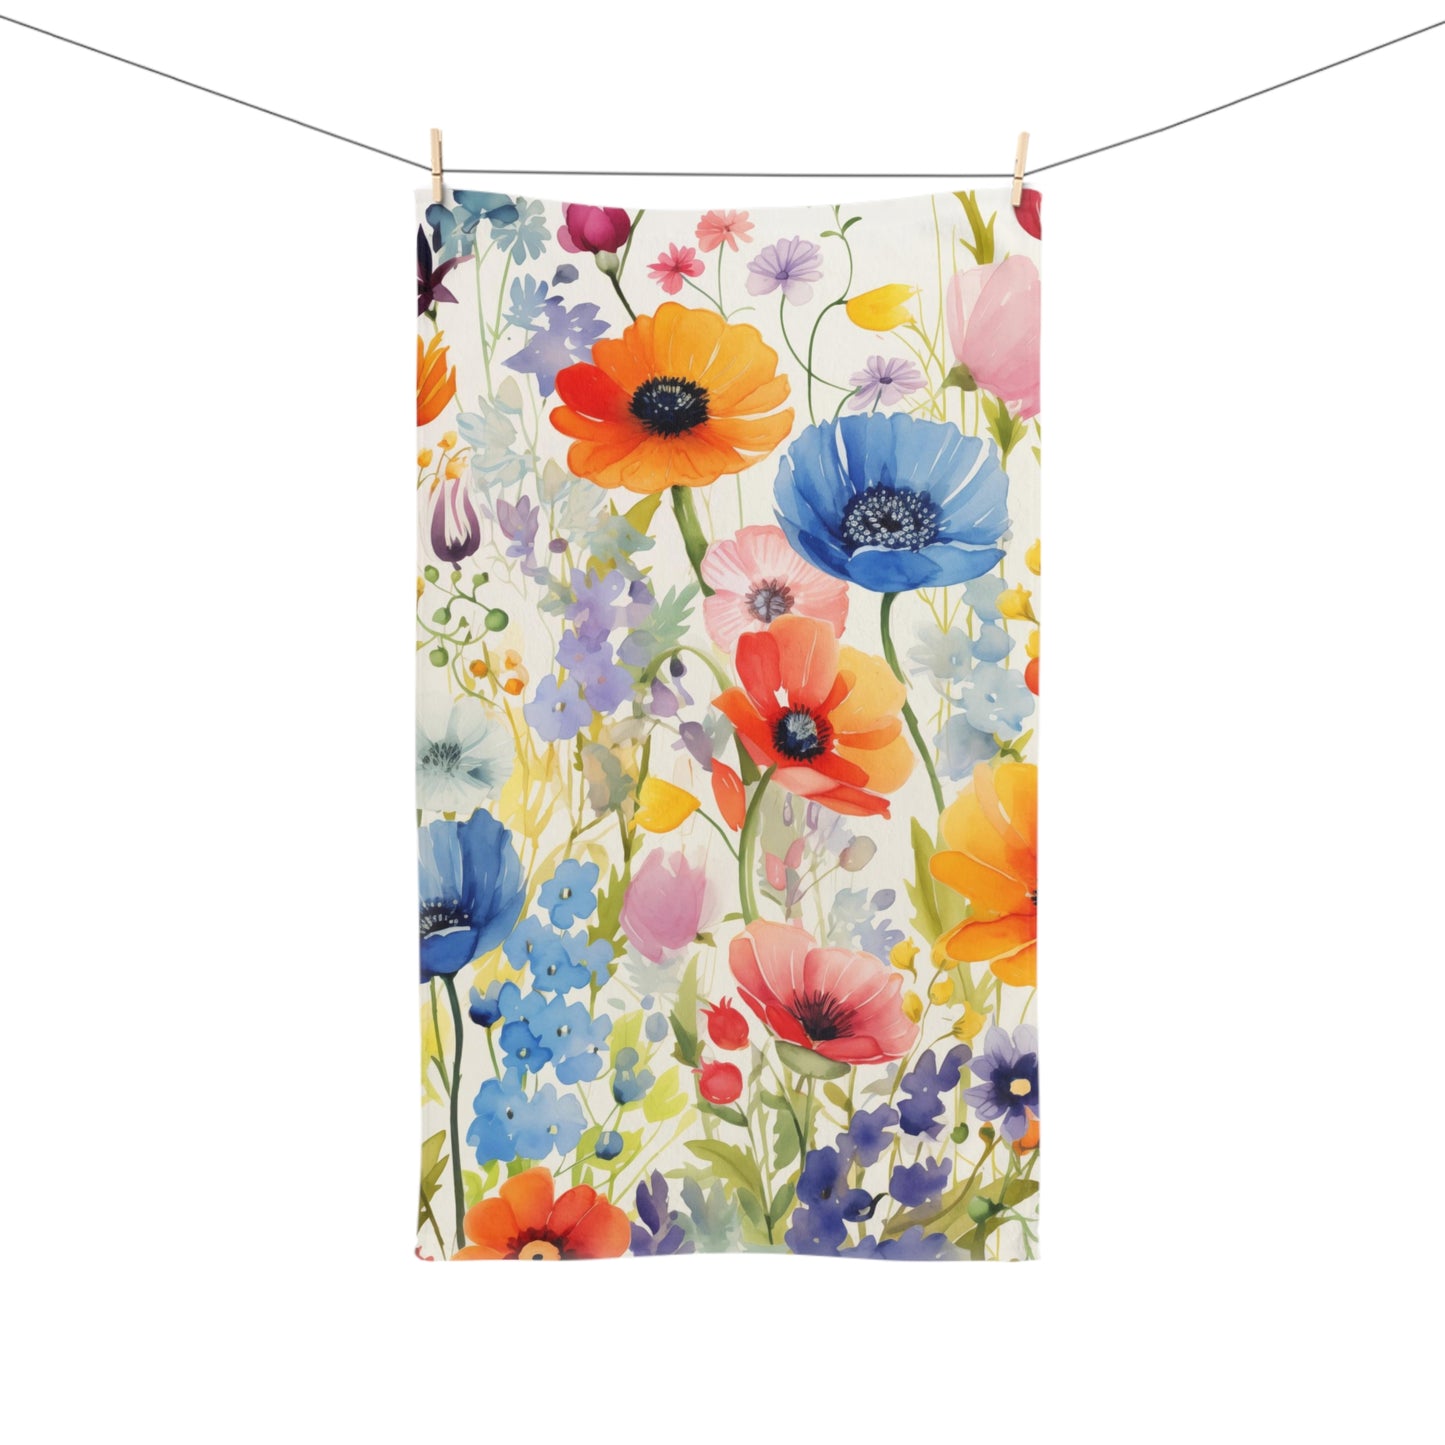 Wildflowers Hand Towel, Watercolor Floral Tea Bath Bathroom Guest Kitchen Cotton Towel Great Cute Gift Her Women Farmhouse Kitchen Linen